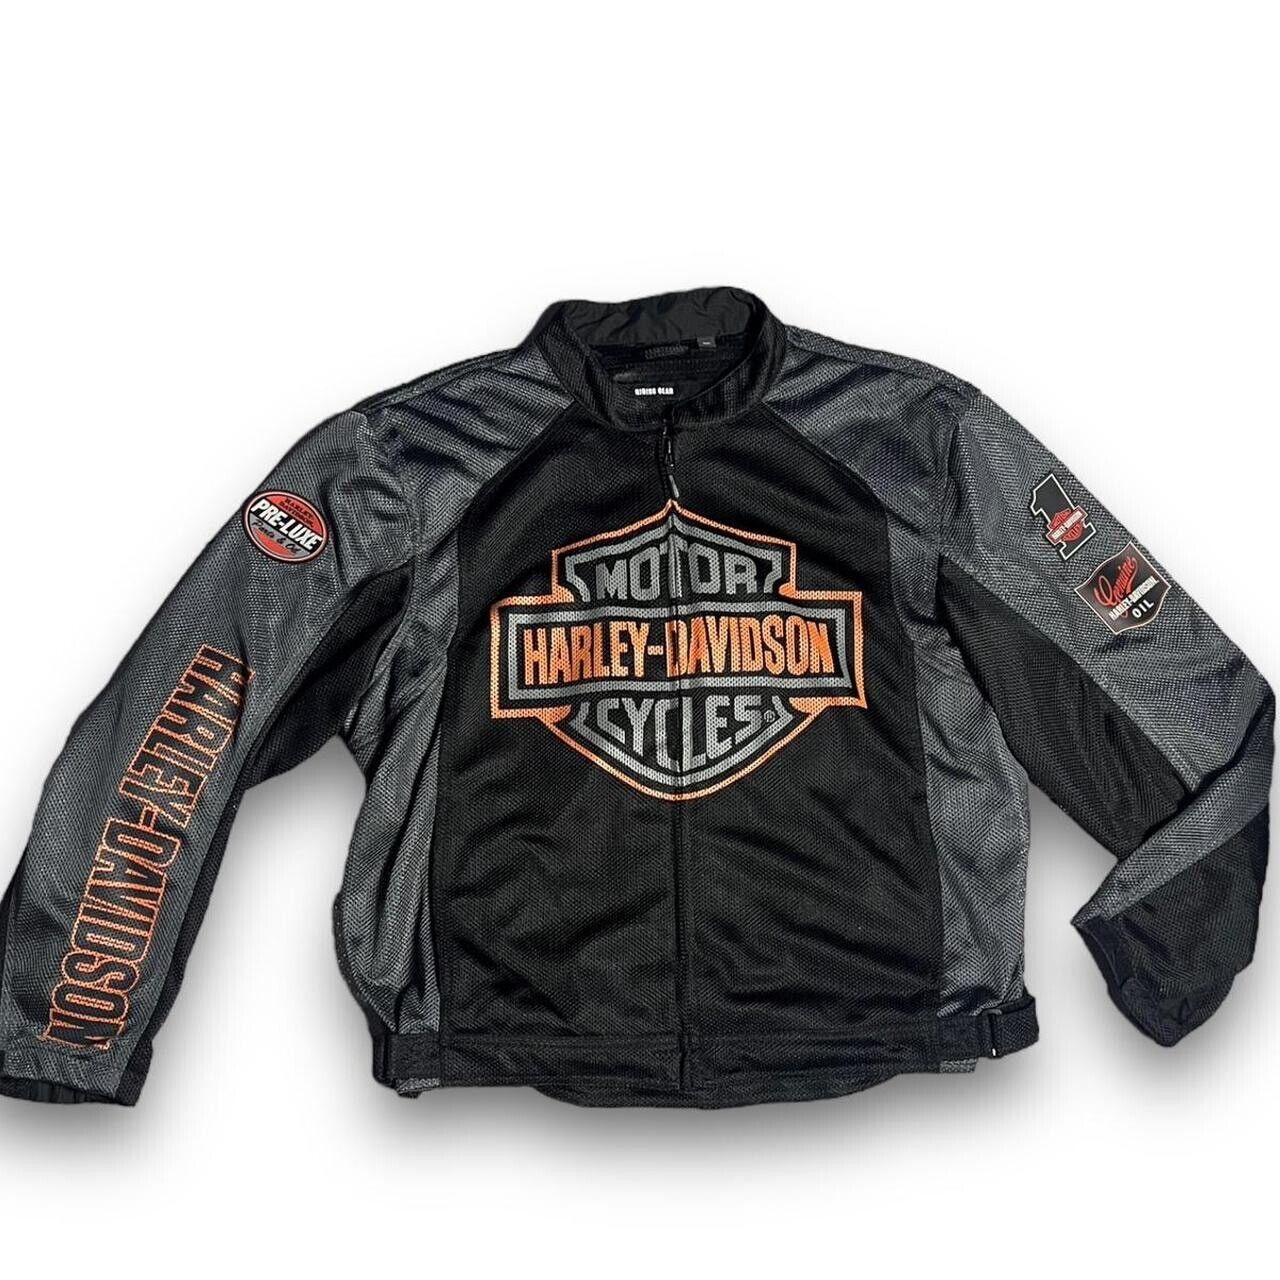 Men's Harley Davidson Genuine Motorclothes Mesh Jacket - Size 2XL